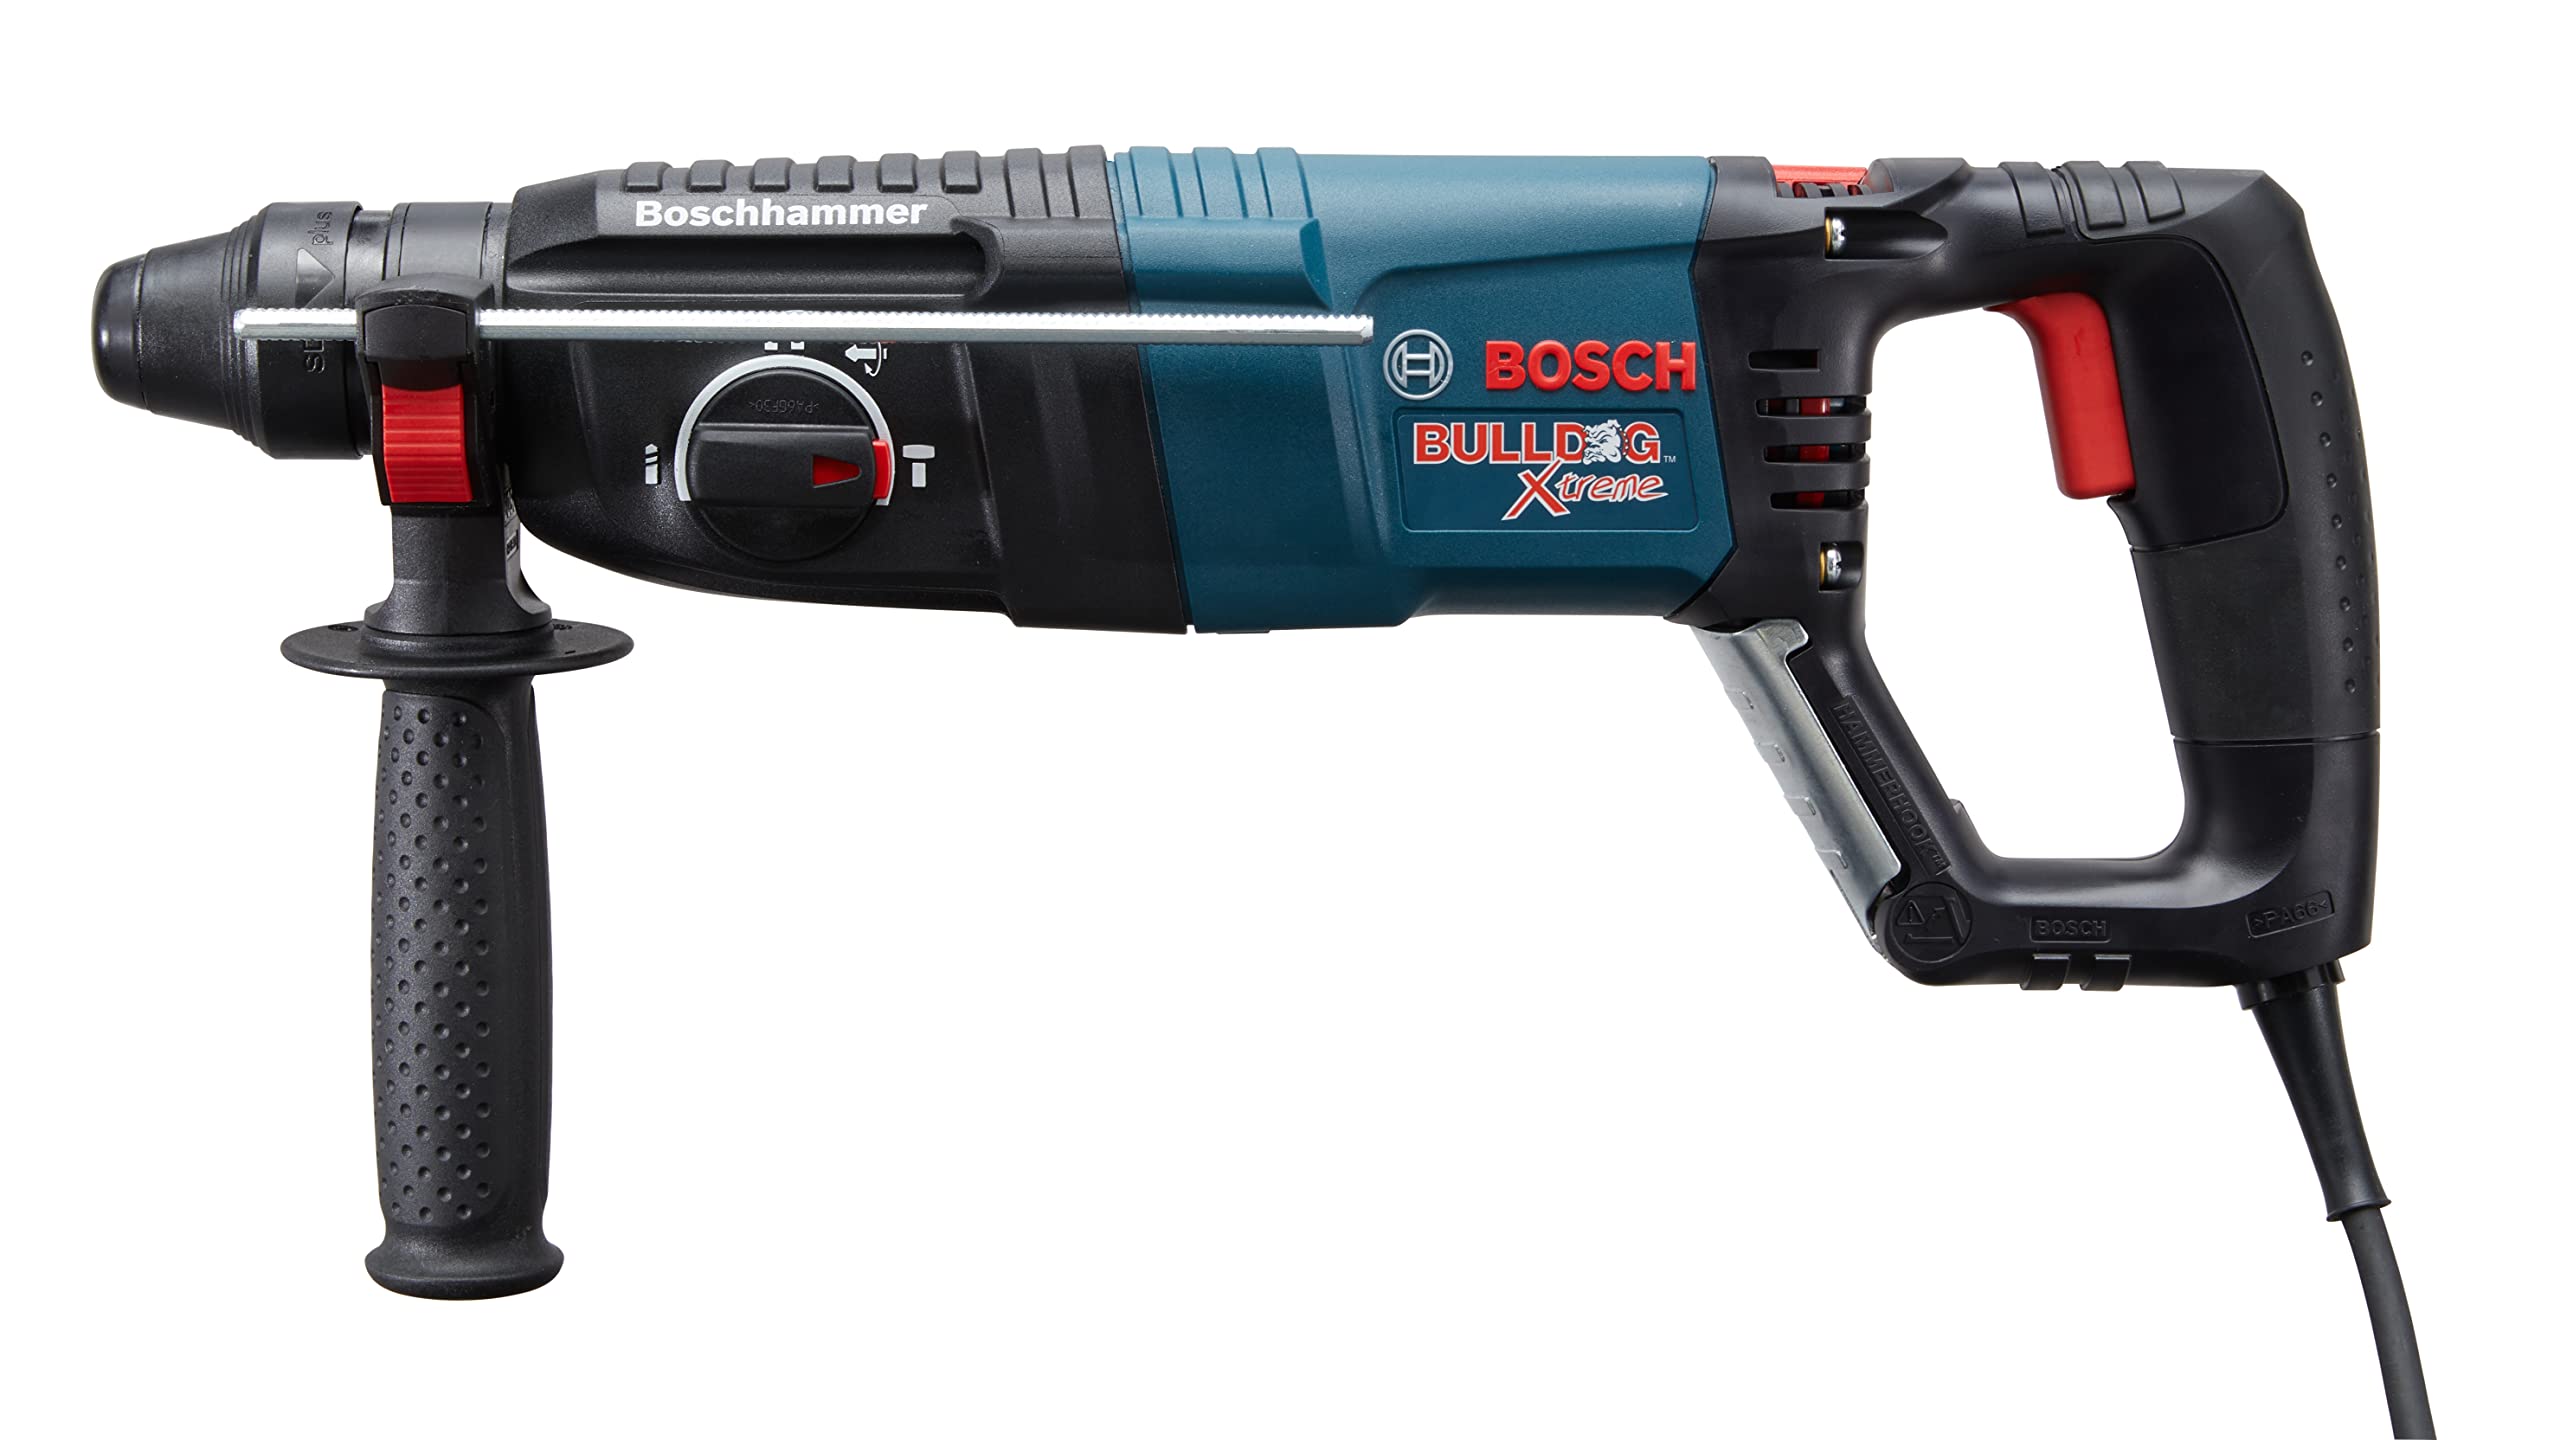 BOSCH 11255VSR Bulldog Xtreme 1 inch 8 Amp Rotary SDS Hammer Drill $159